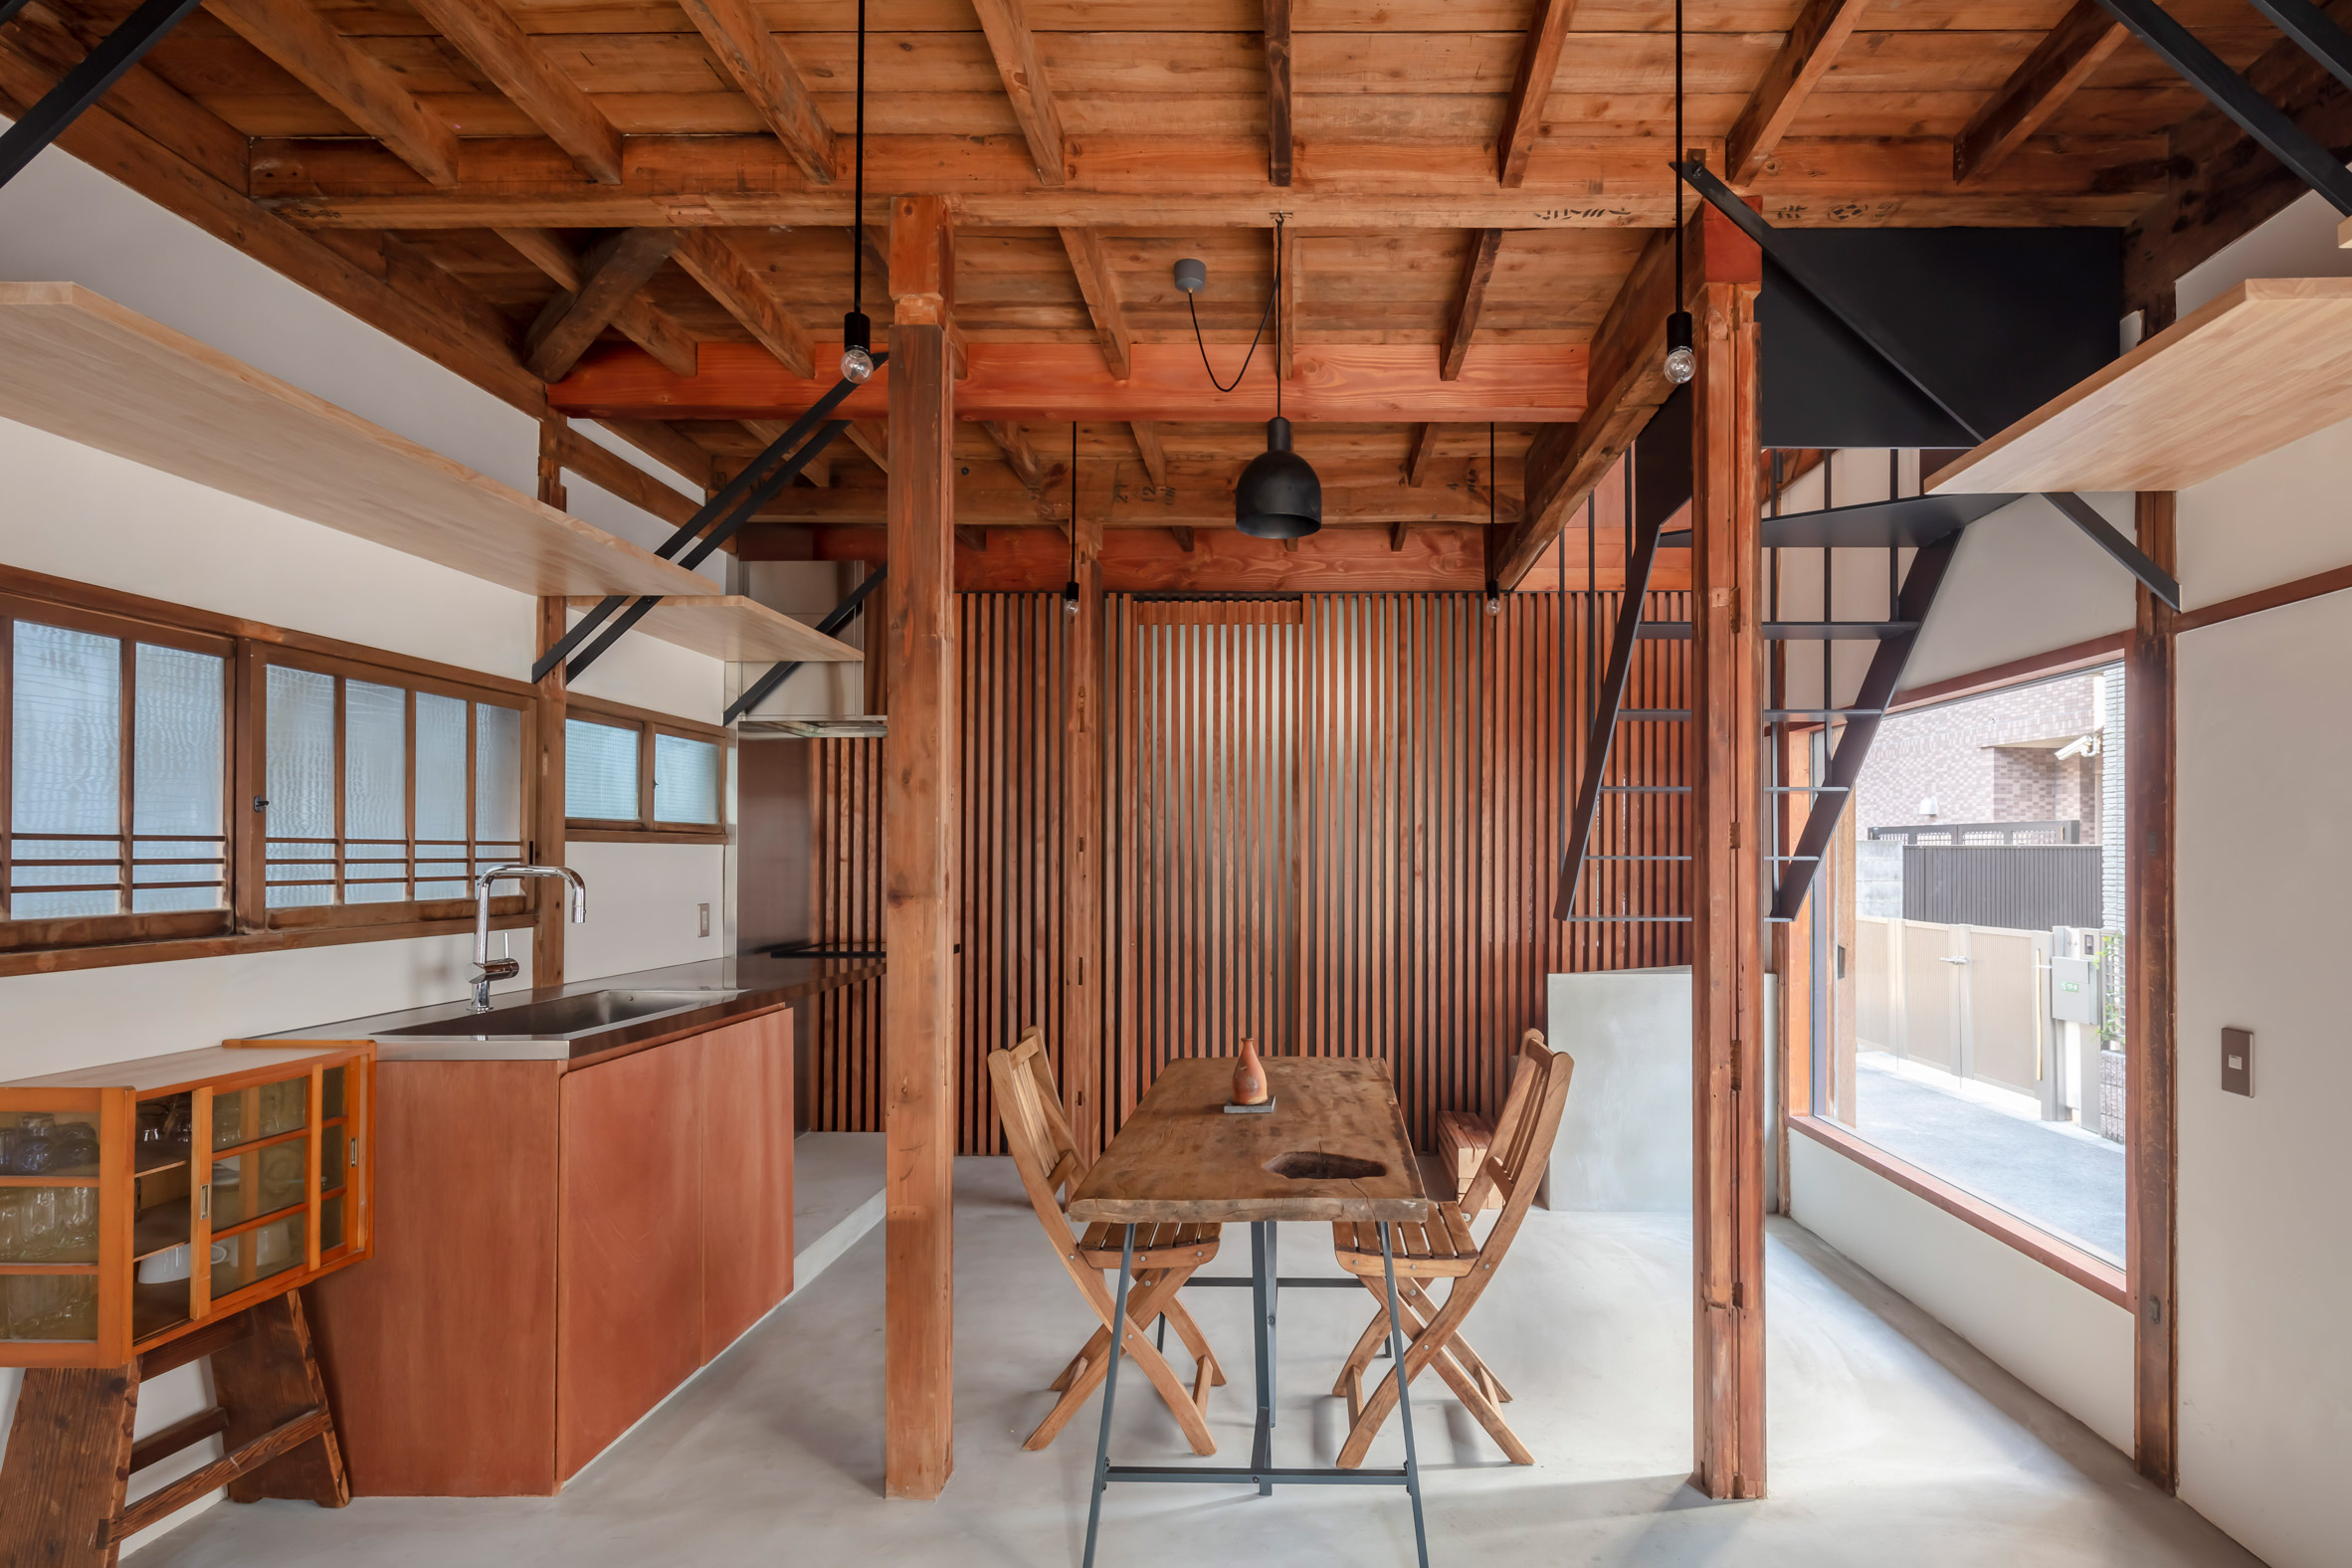 Japanese home interior with cedar beams